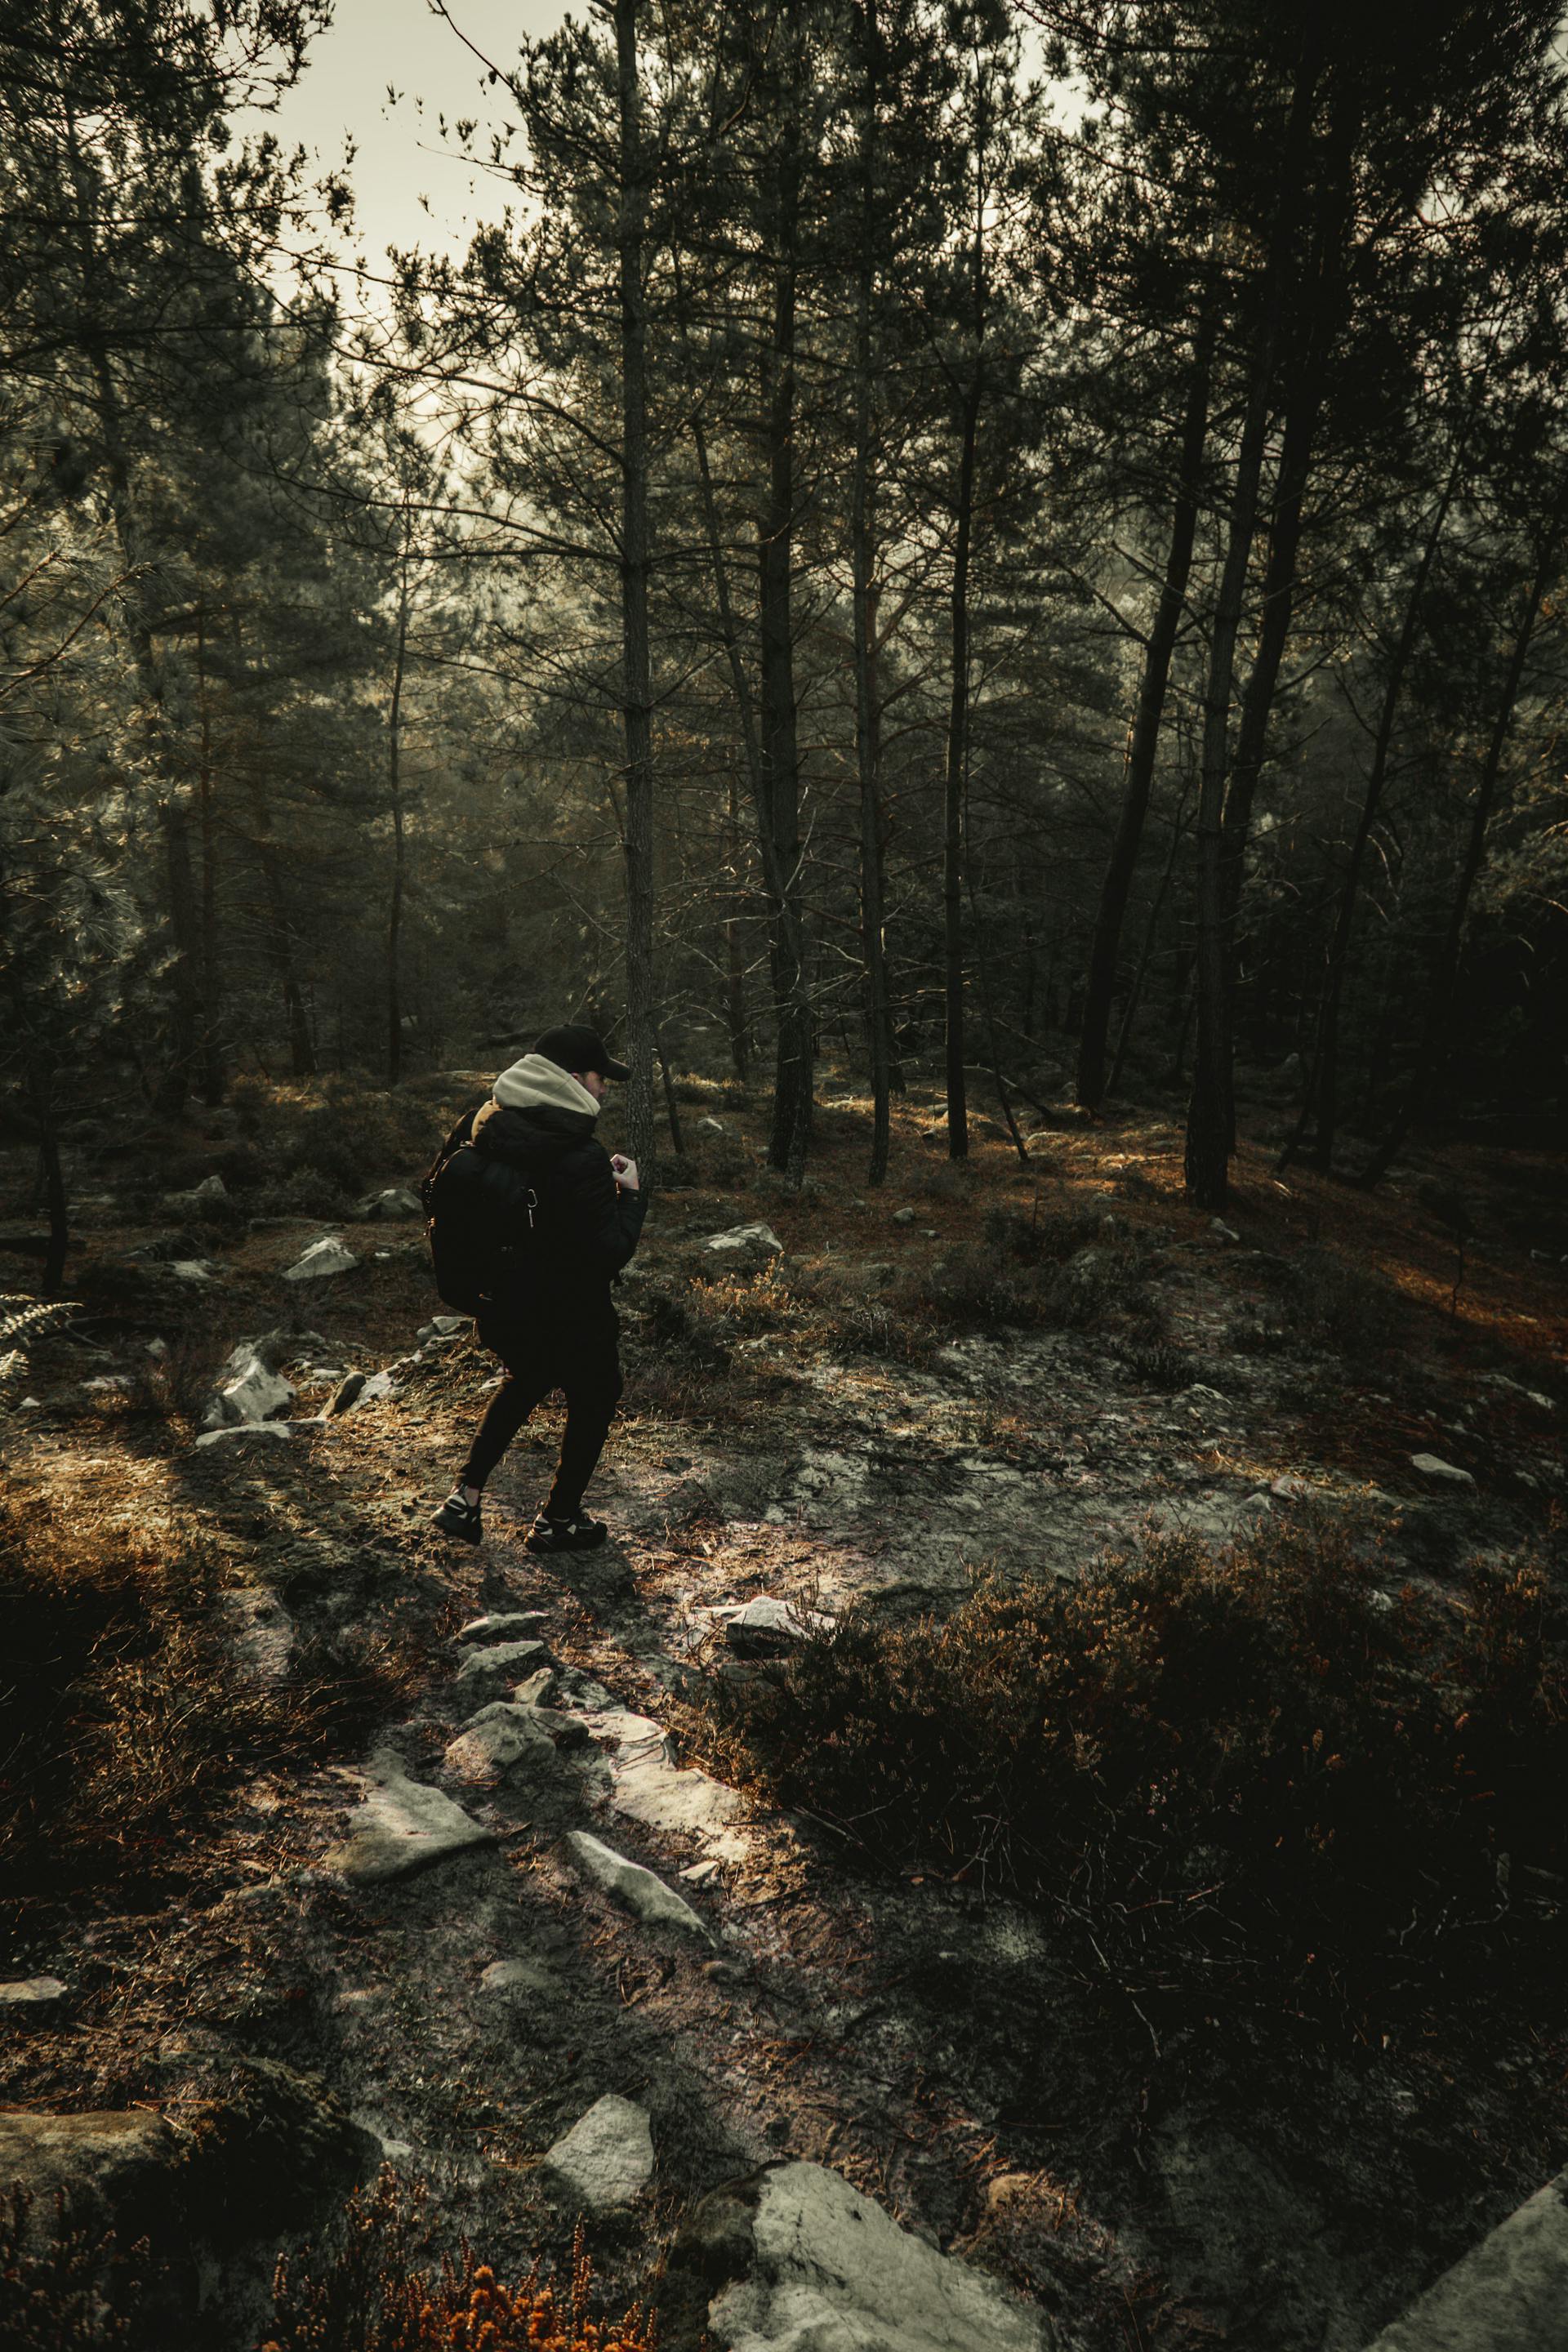 A man hiking | Source: Pexels